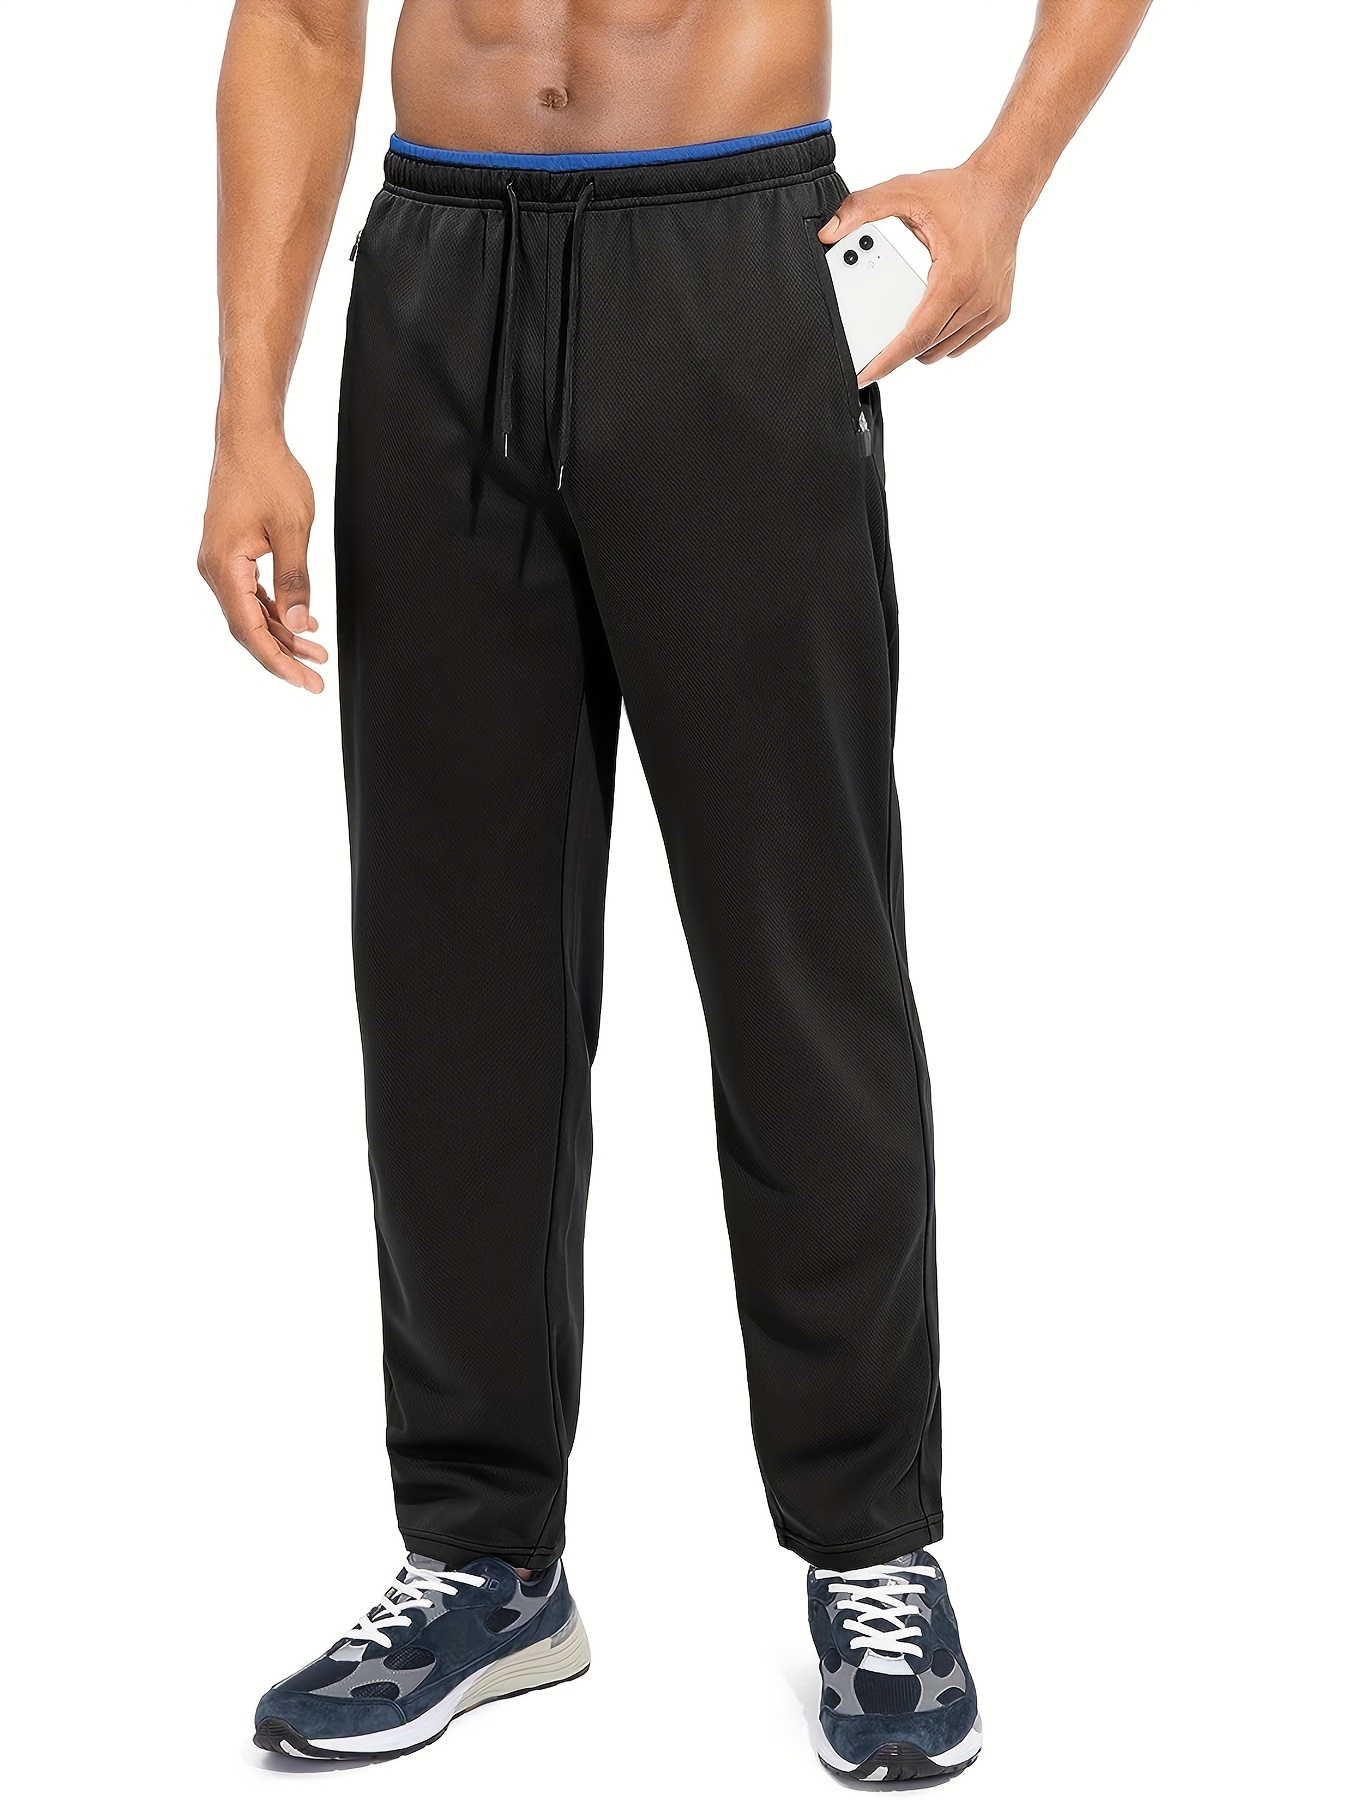 SEONE-G Six Pocket Pants for Boys -Boys Stylish Jogger Pants/Boys Jogger  Jeans